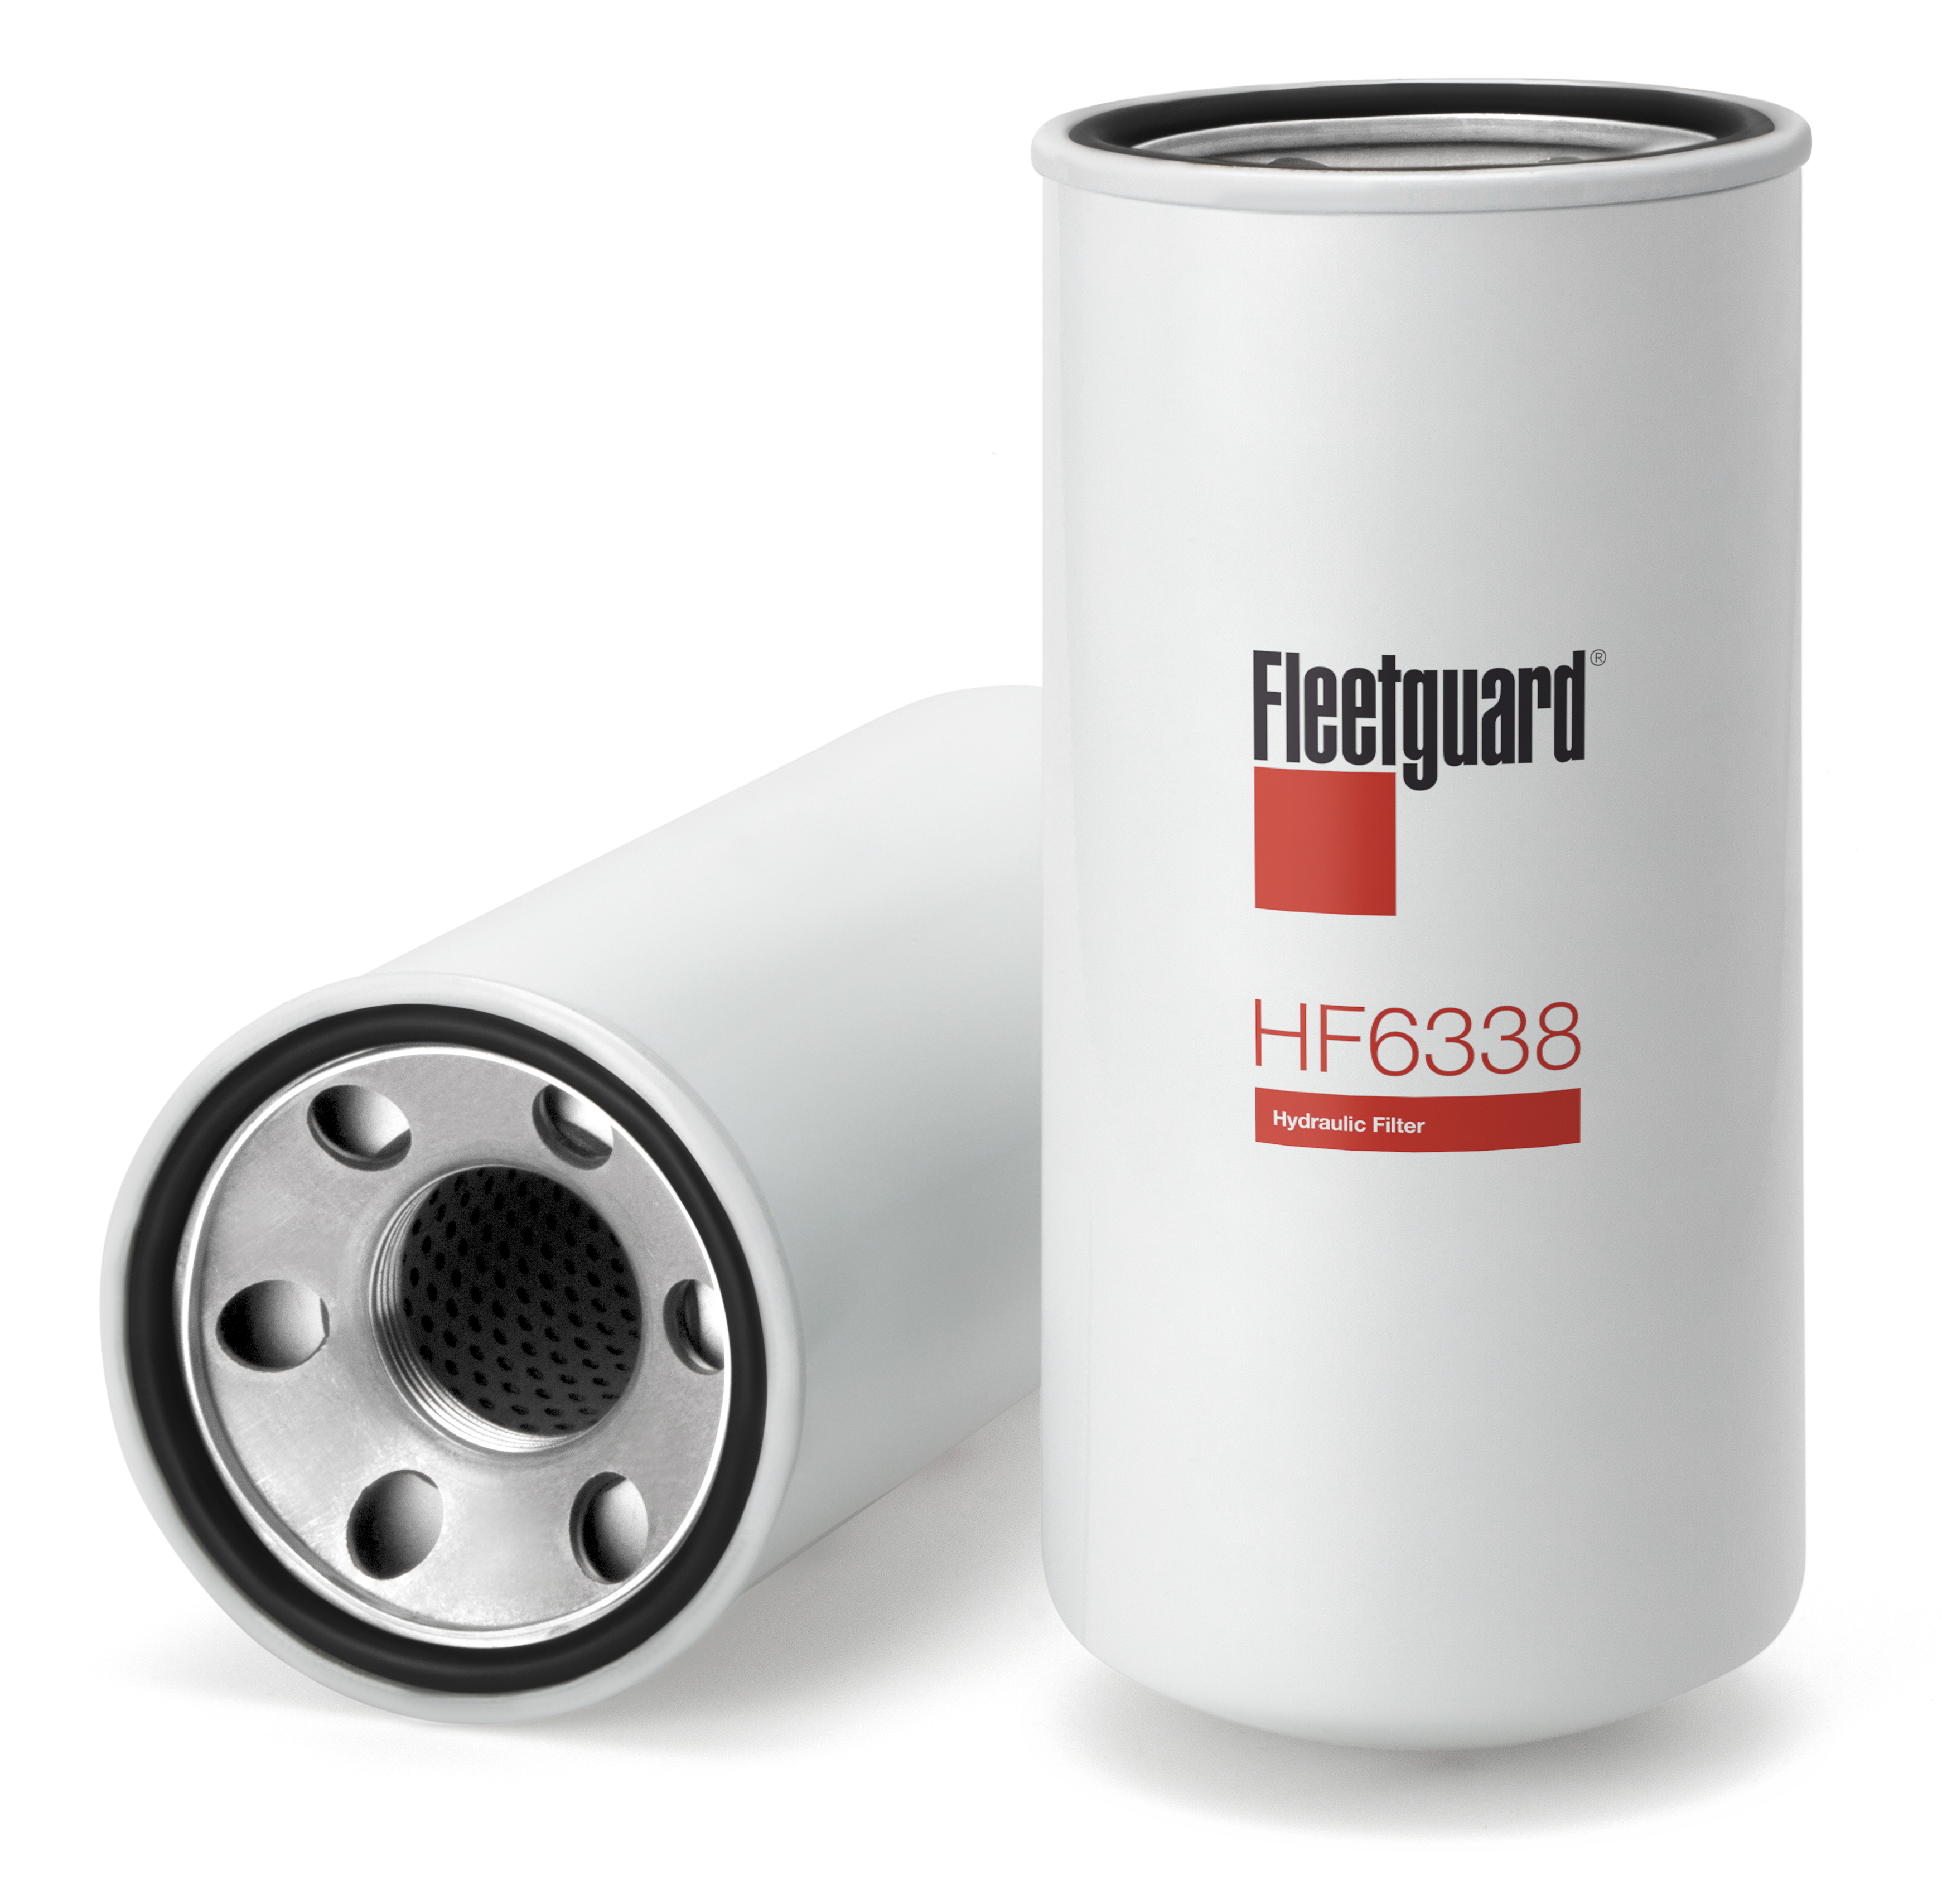 HF6338 Fleetguard Hydraulic, Spin-On - Filter Discounters